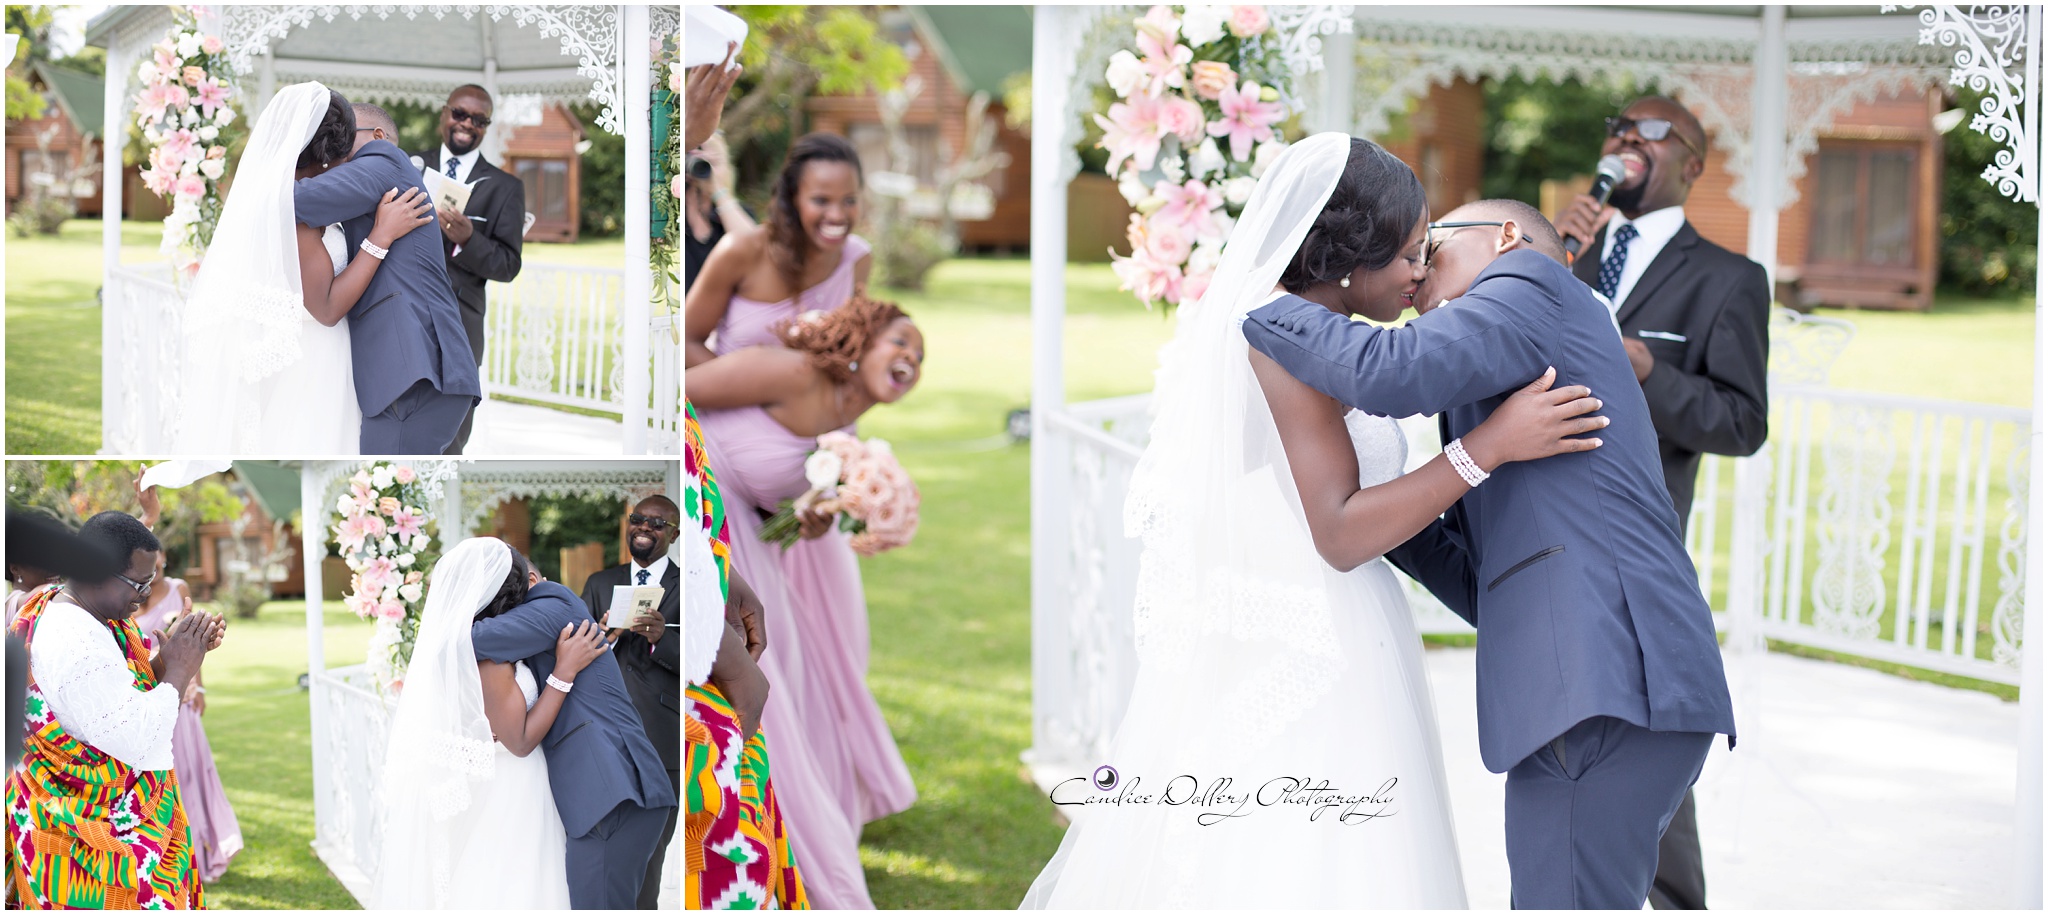 Reuben & Antoinette's Wedding - Candice Dollery Photography_7882